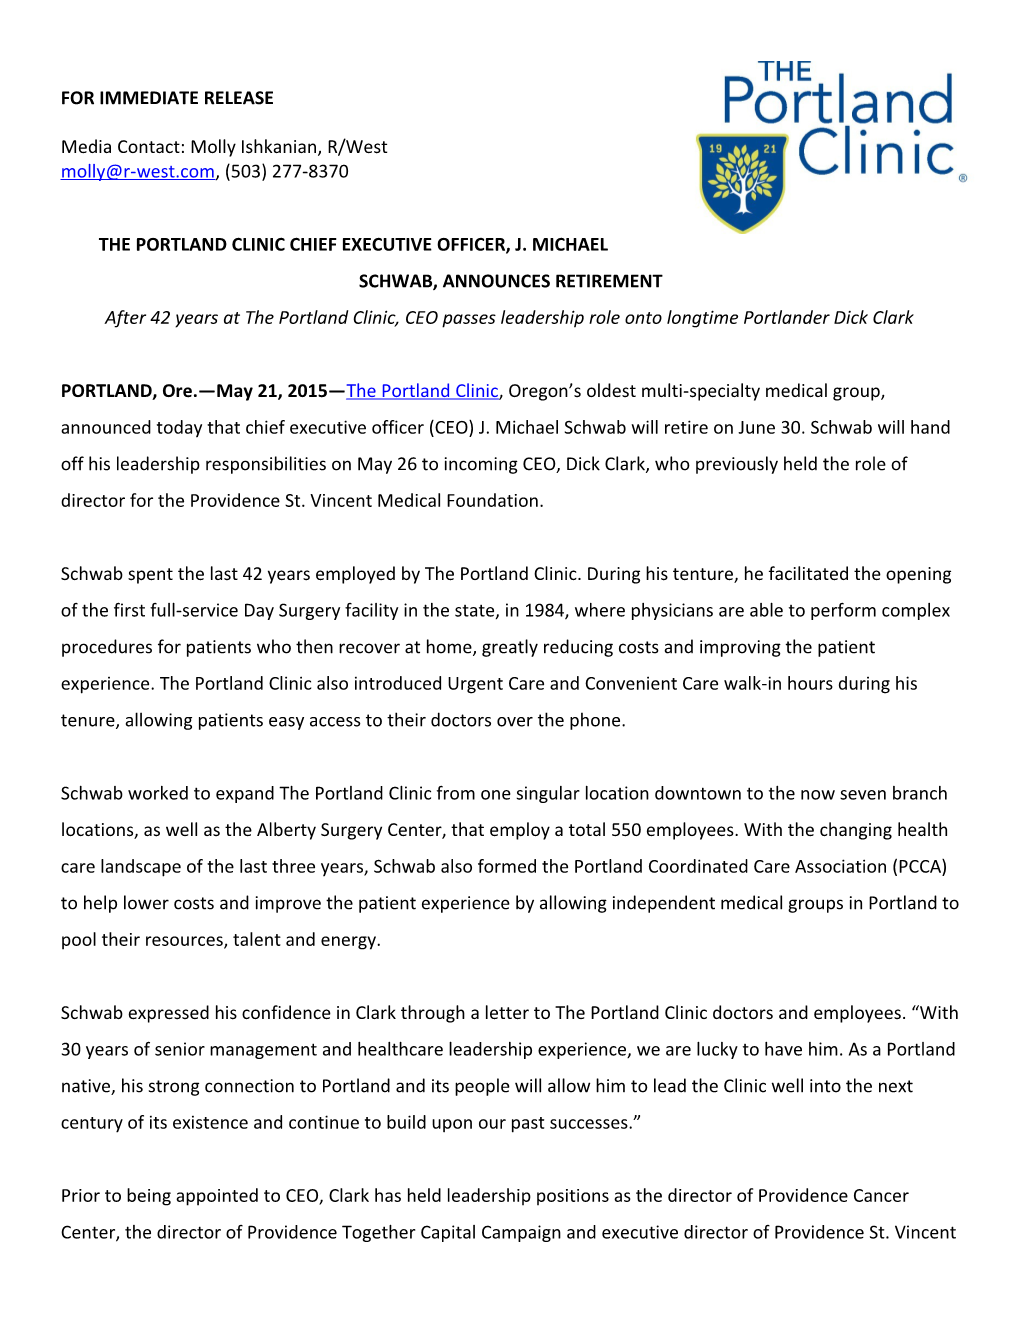 The Portland Clinic Chief Executive Officer, J. Michael Schwab, Announces Retirement